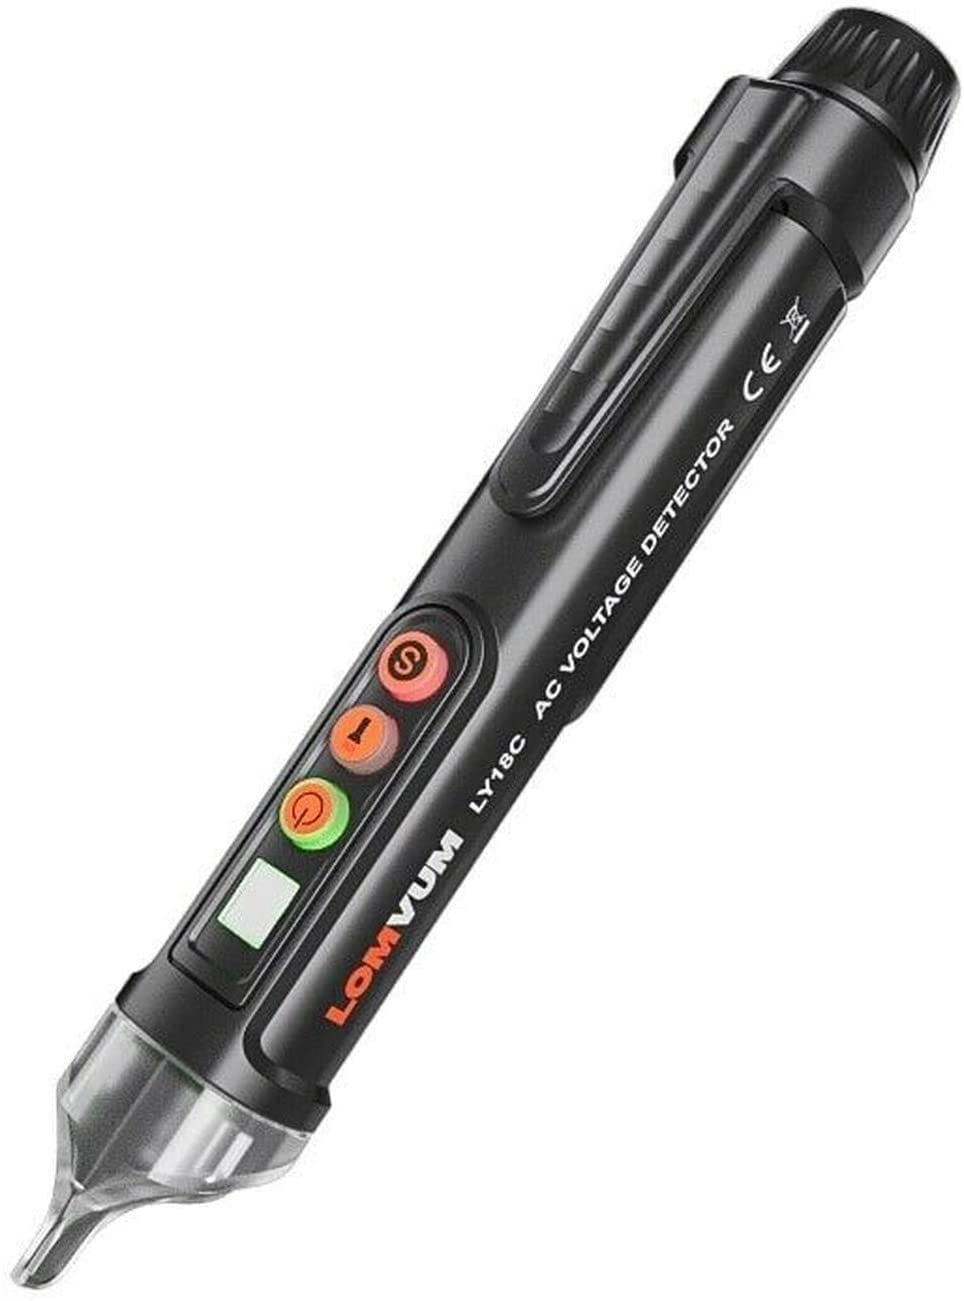 AC/DC Voltage Test Pencil 12V/48V-1000V Voltage Sensitivity Electric Compact Pen 